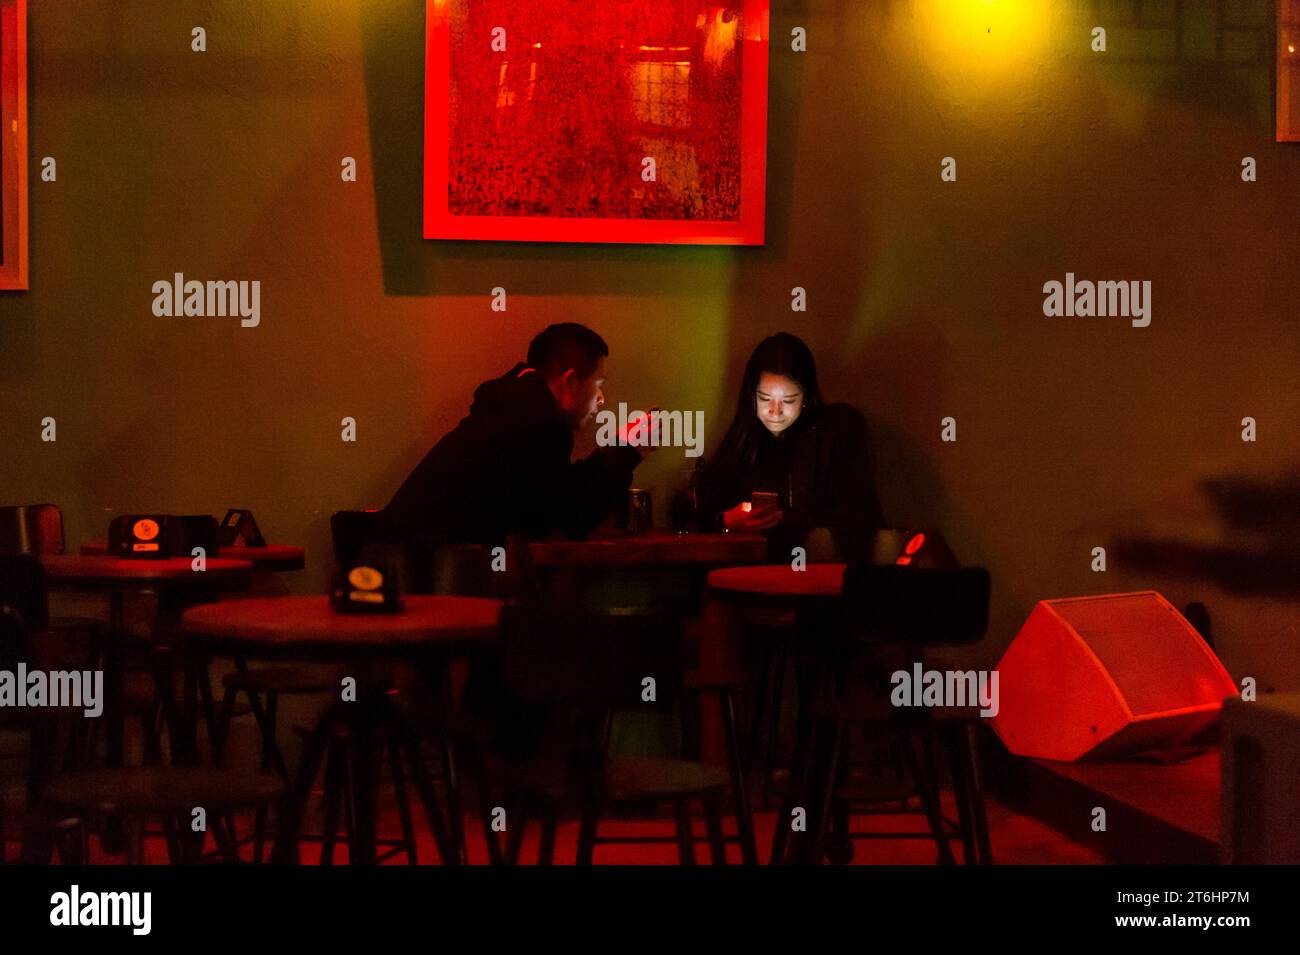 China, Peking, young couple in bar Stock Photo